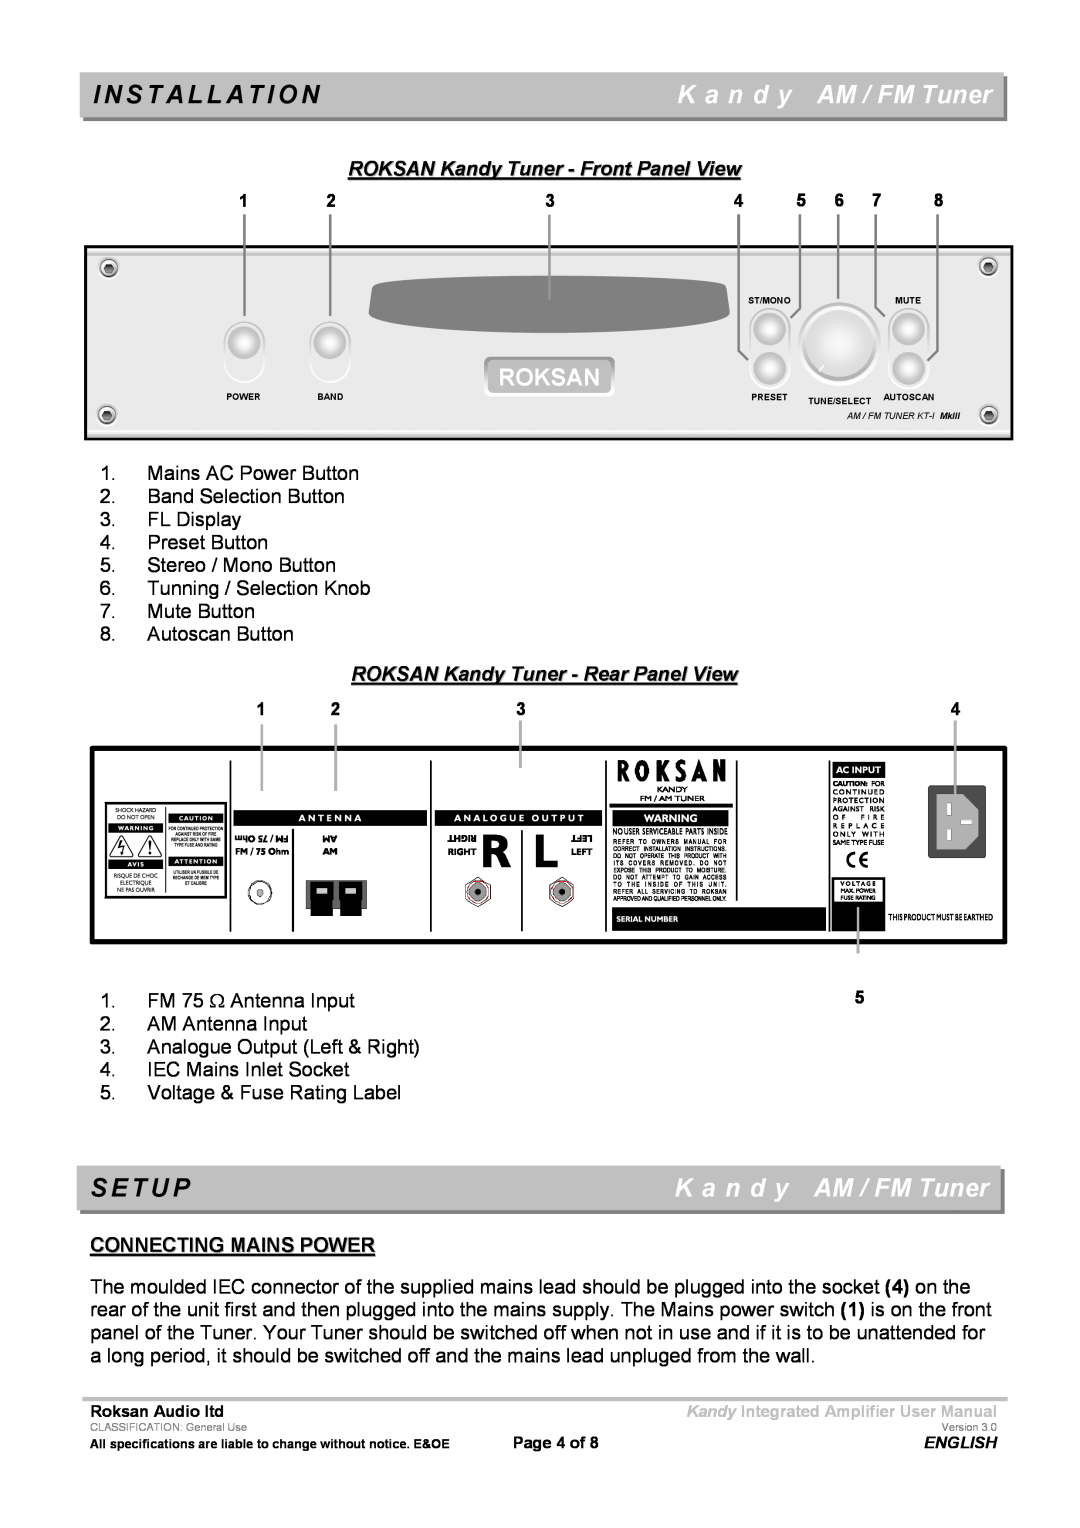 Roksan Audio MK III user manual Setup, ROKSAN Kandy Tuner - Front Panel View, ROKSAN Kandy Tuner - Rear Panel View, Roksan 